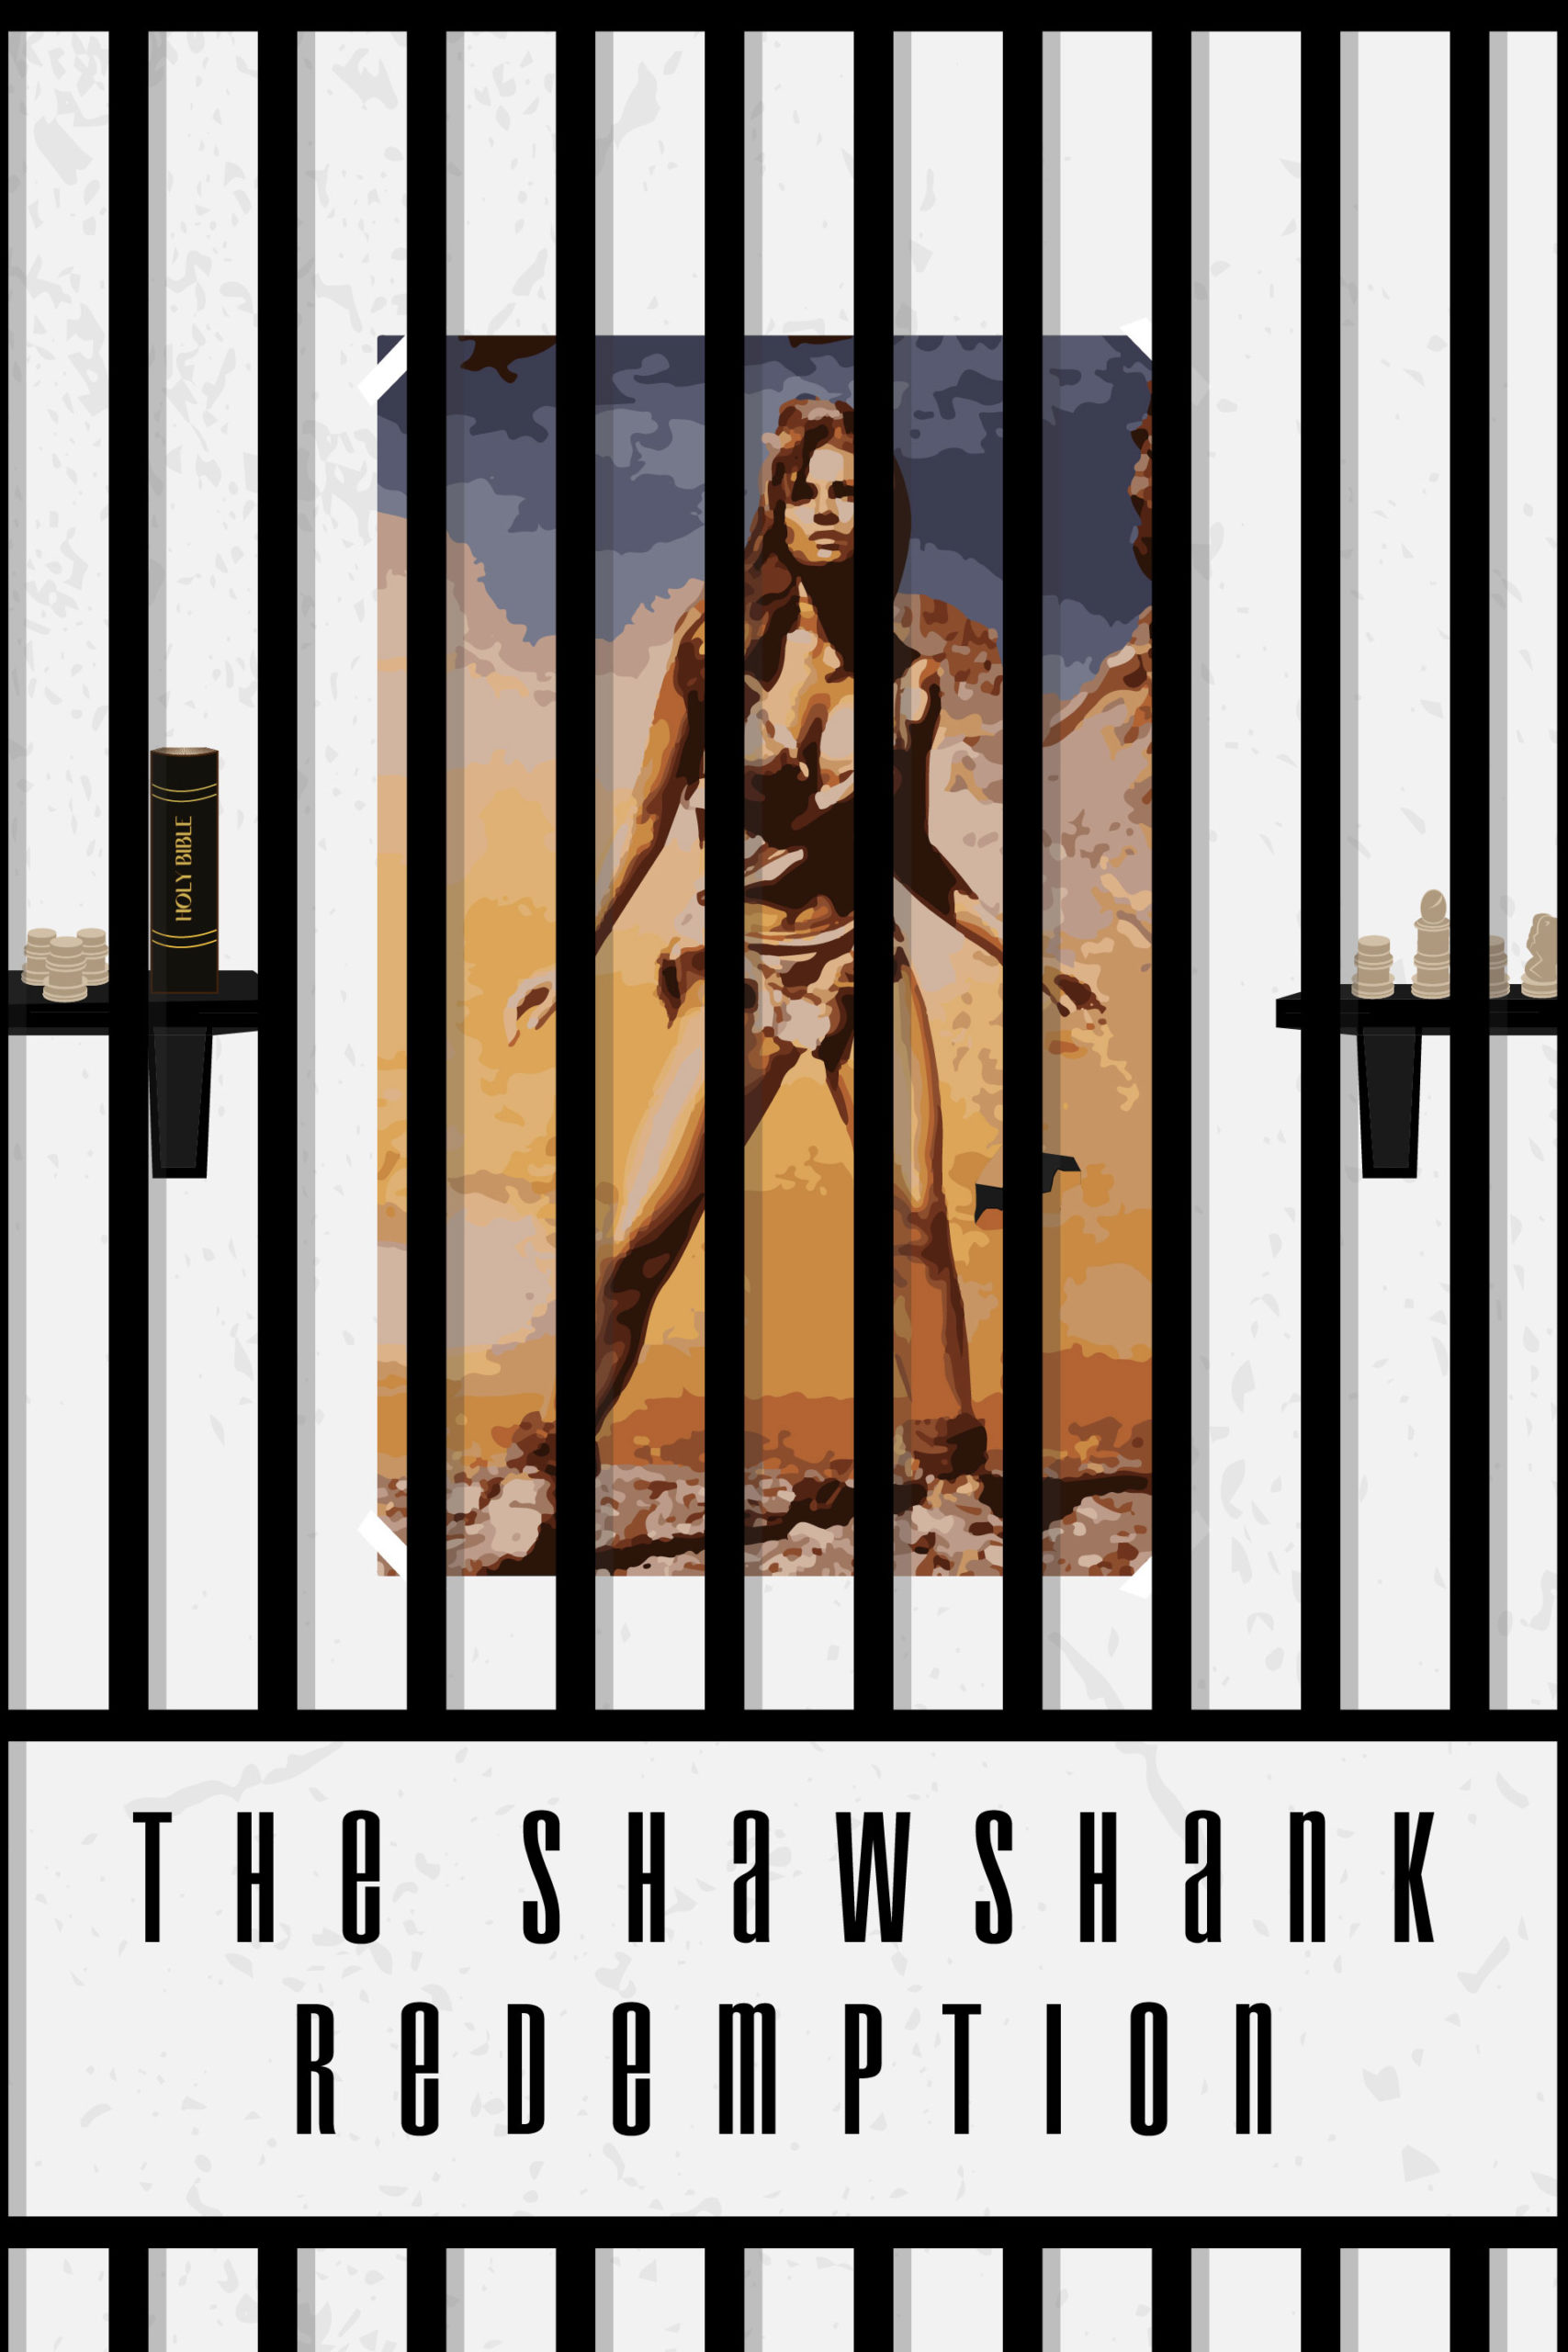 The-ShawshankRedemption_jail_less_unapelialdia